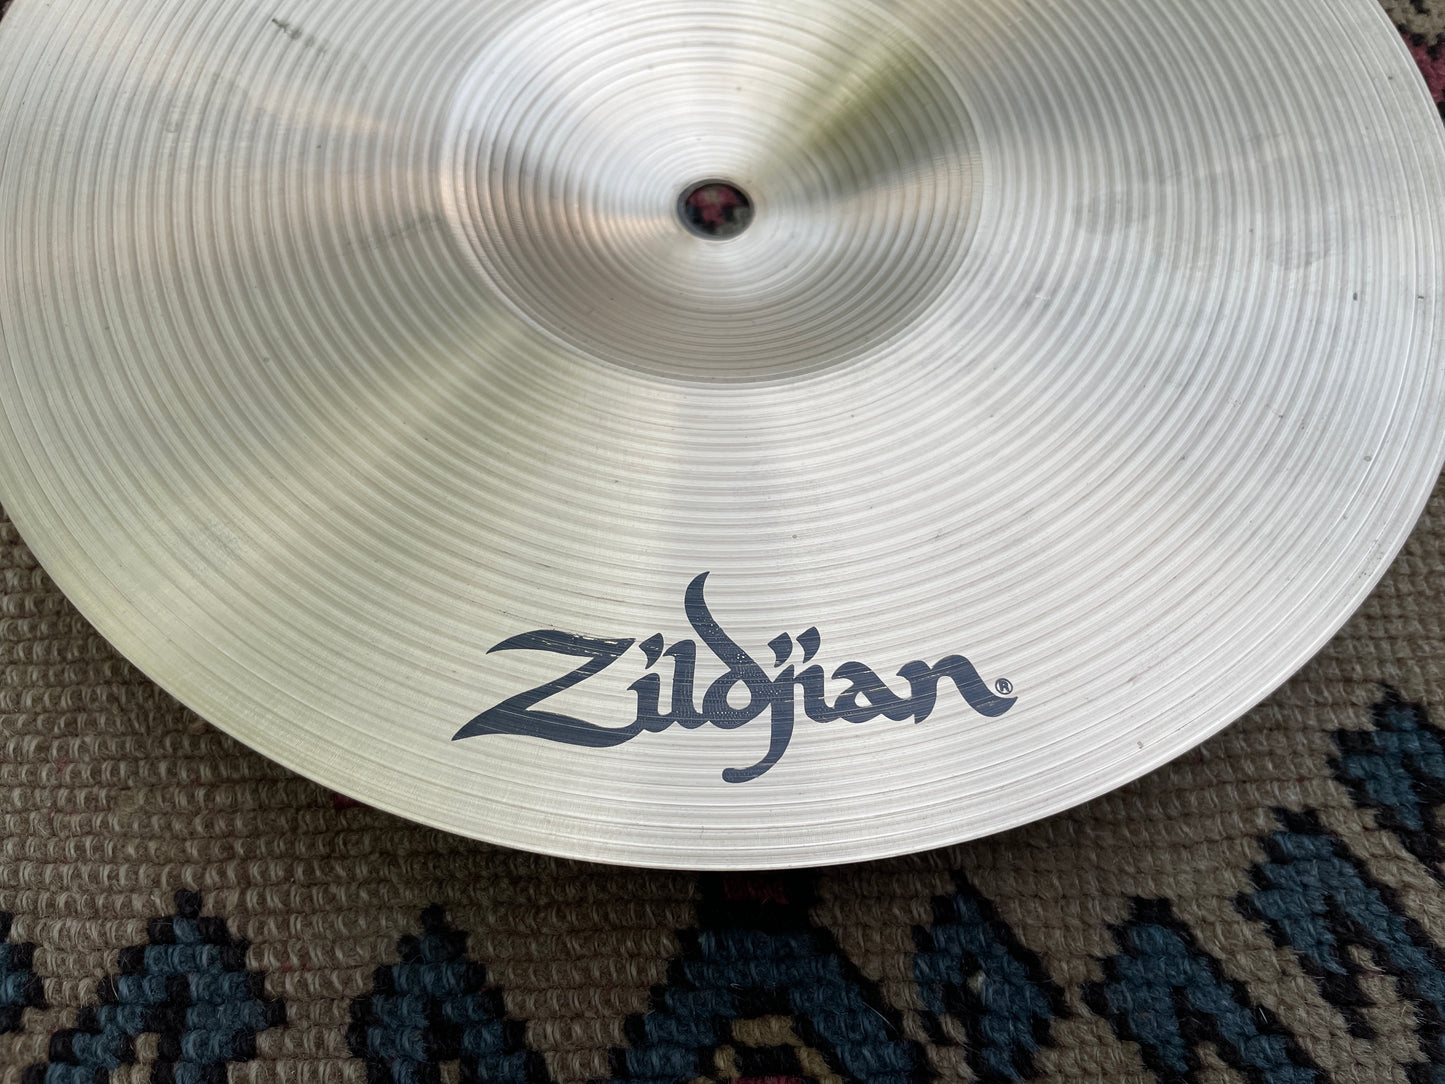 10" Zildjian A 1990s Splash Cymbal 284g